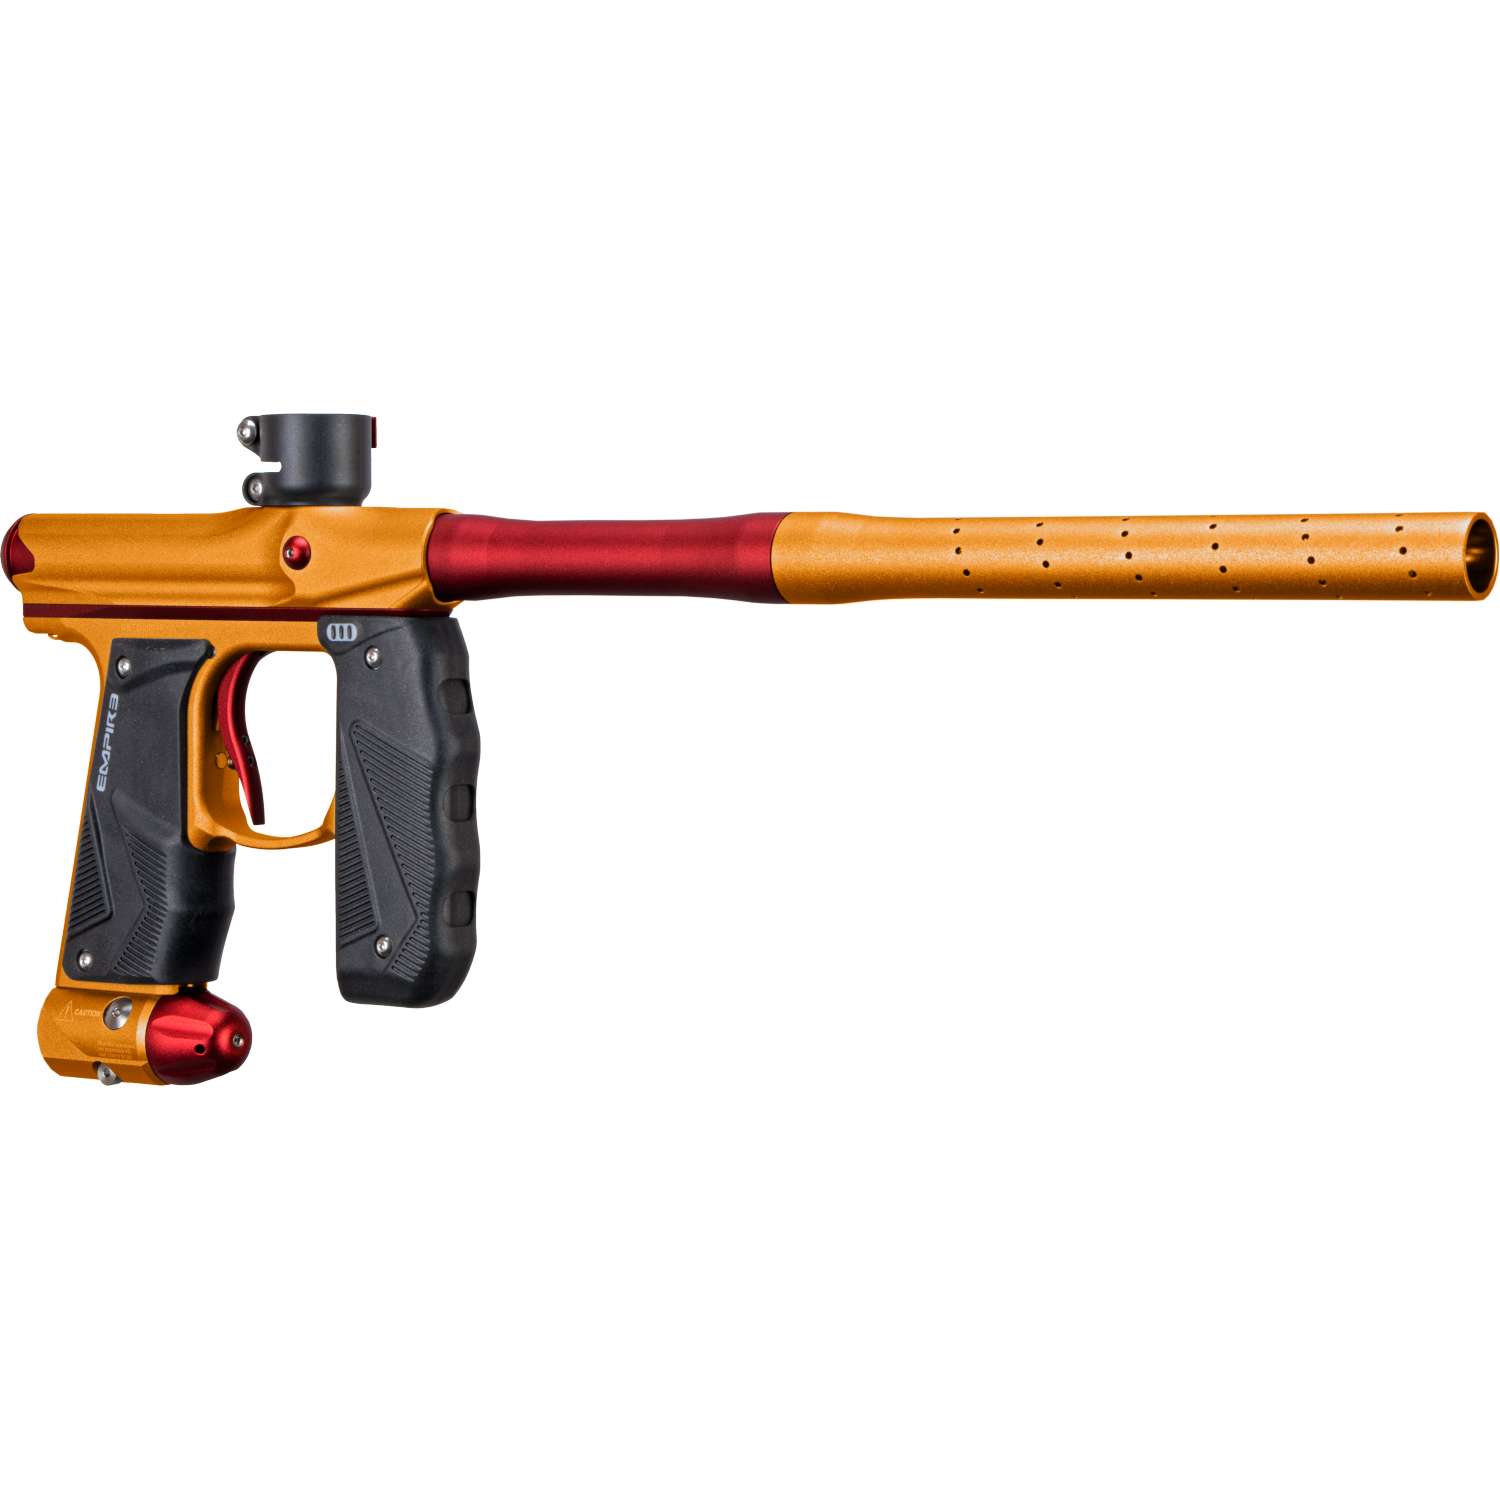 Empire Mini GS Paintball Gun w/ 2 Piece Barrel - Dust Orange / Dust Red - Empire